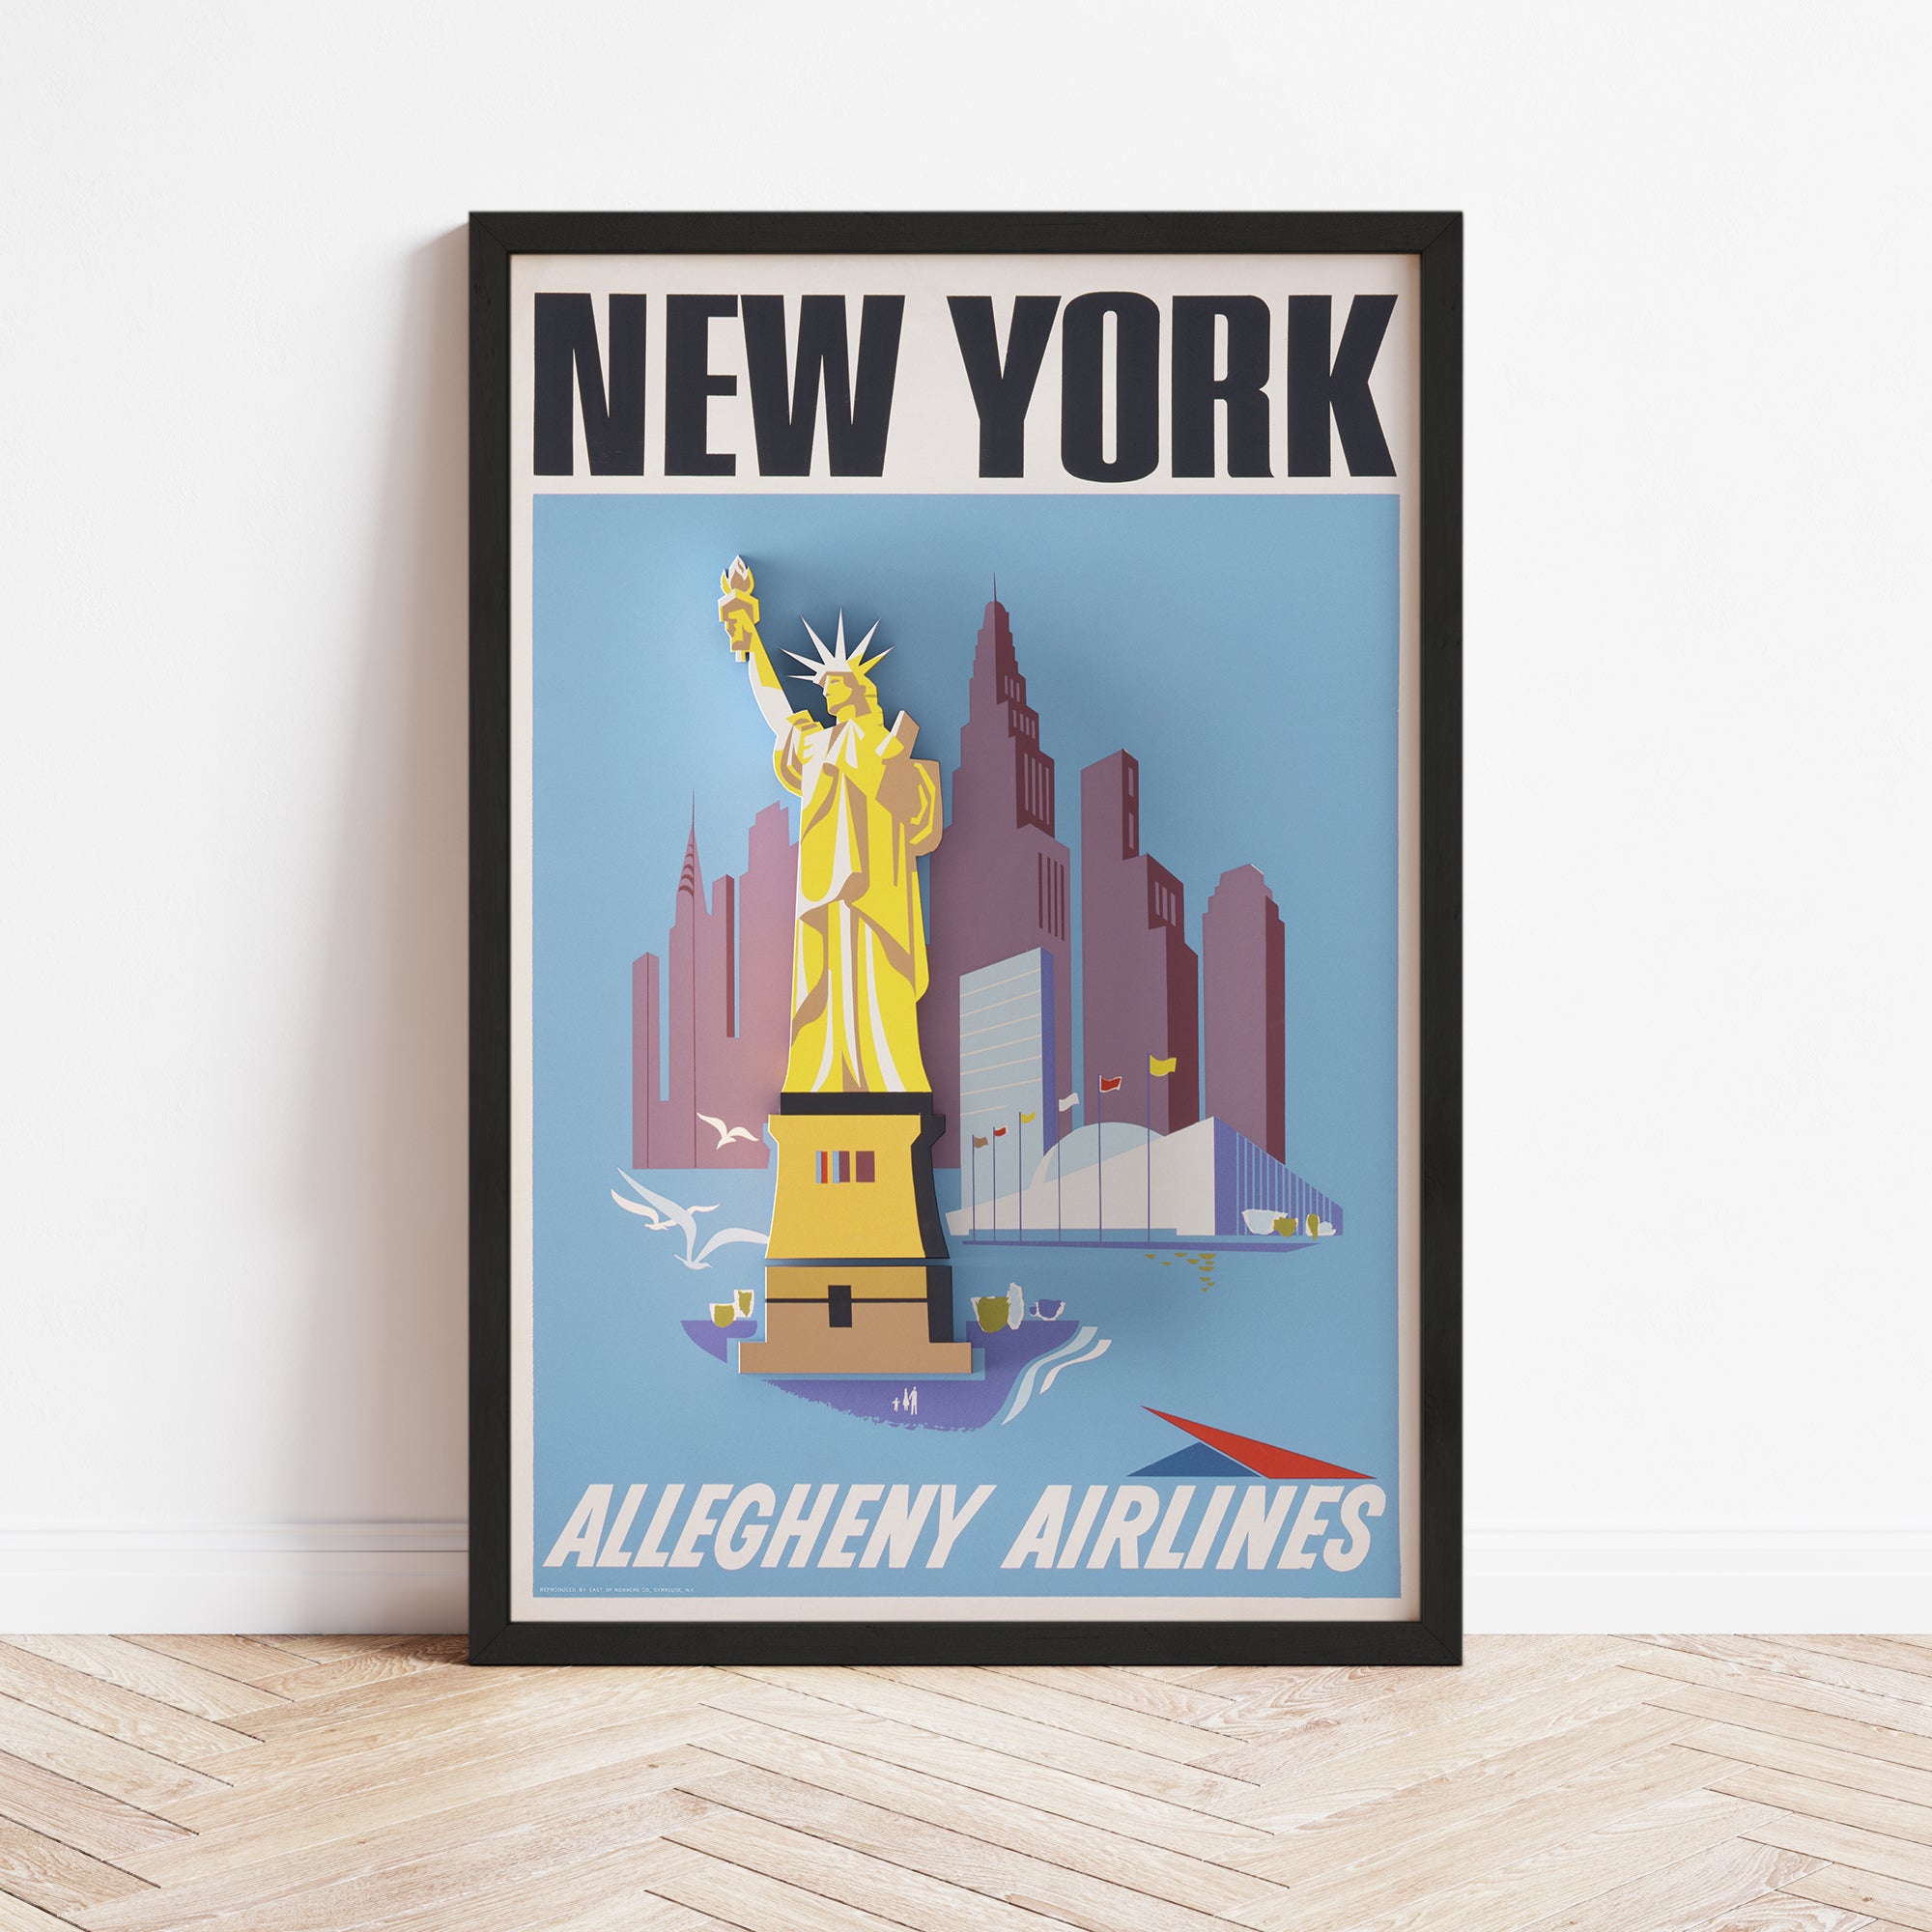 Allegheny Airlines New York (1950) - Retro Art Print